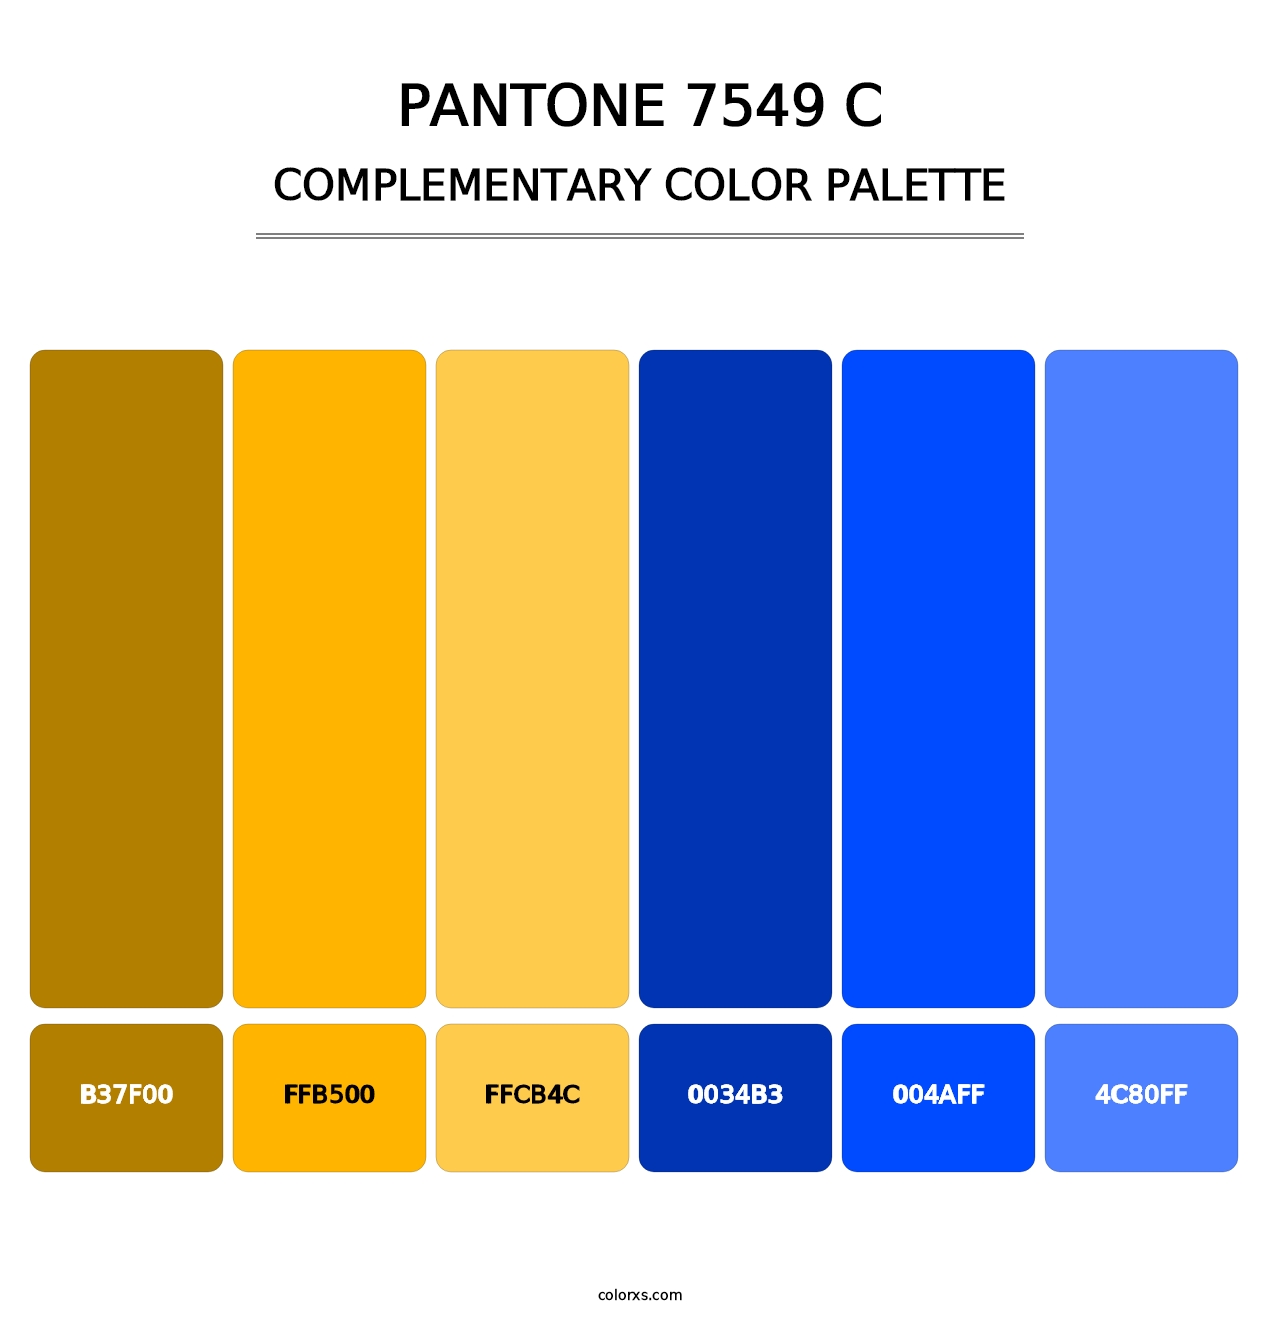 PANTONE 7549 C - Complementary Color Palette